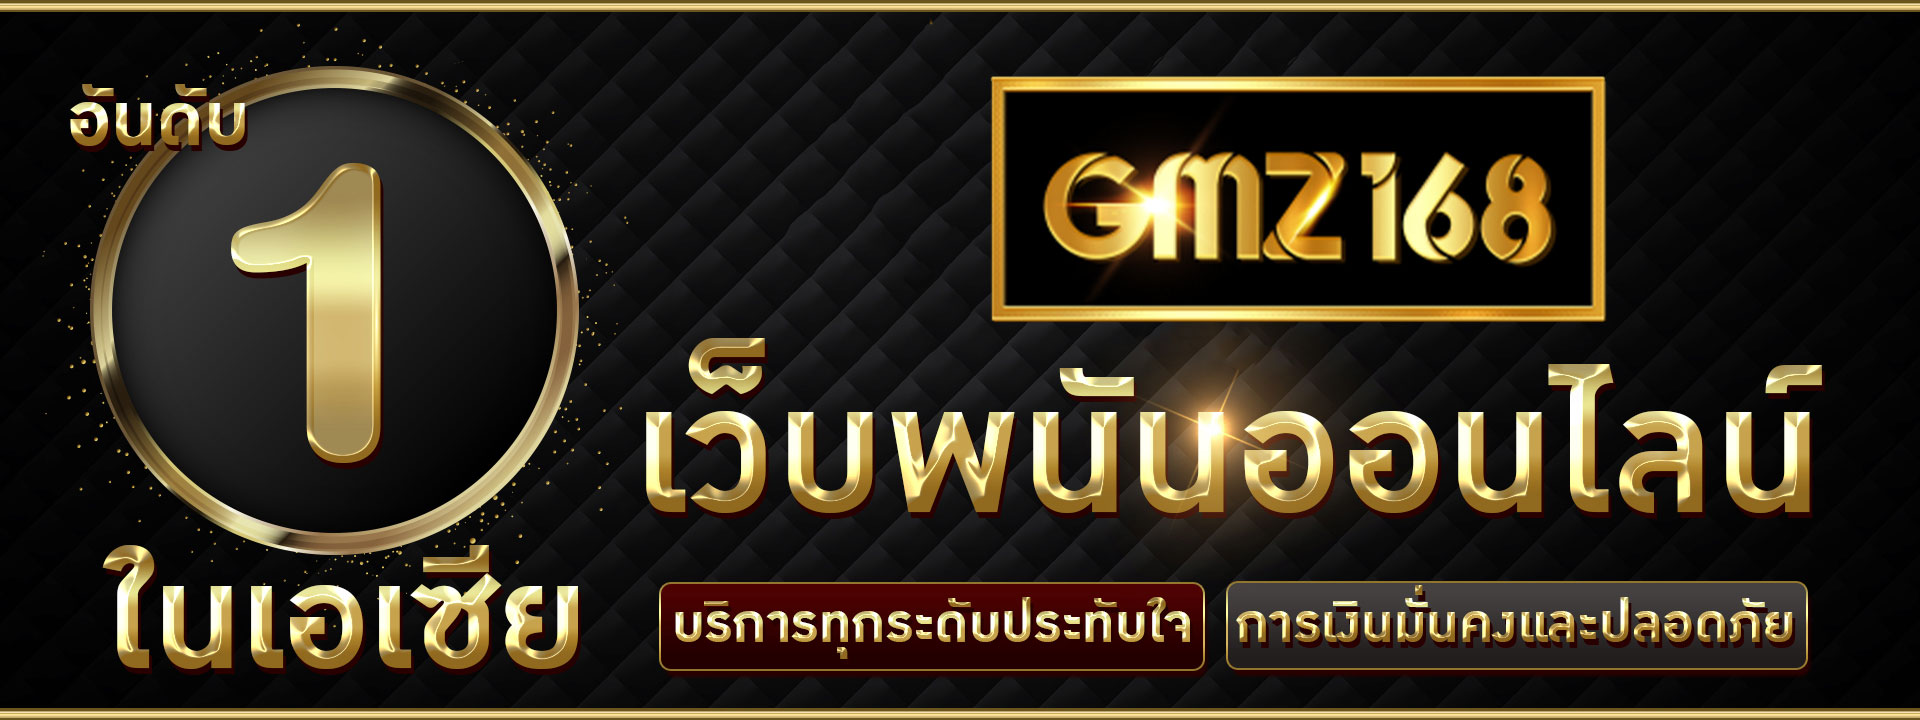 GMZ168_banner